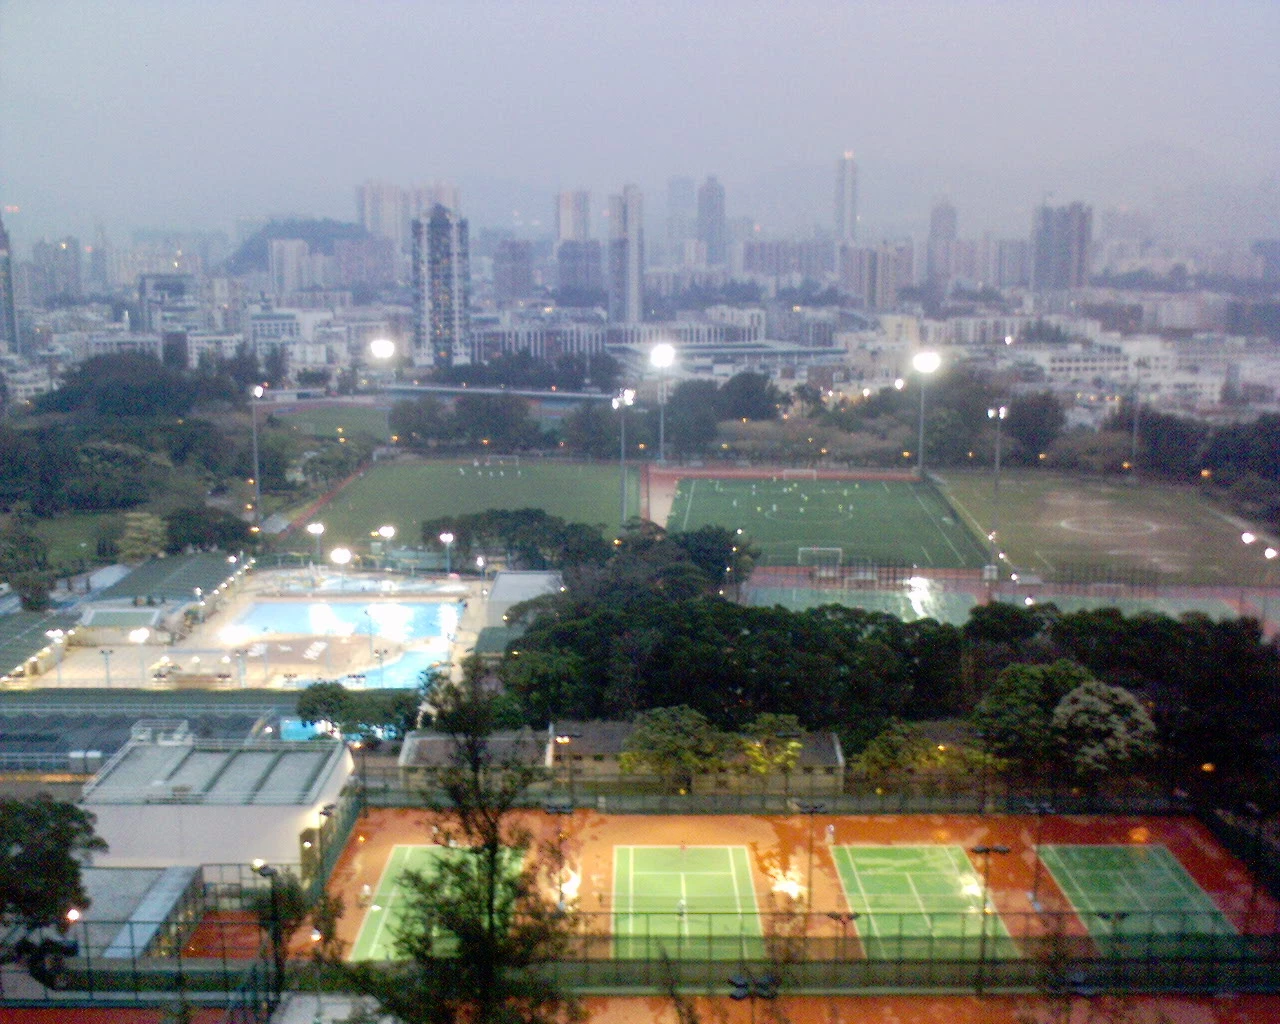 Hong Kong Basketball Court: Kowloon Tsai Park – Courts of the World